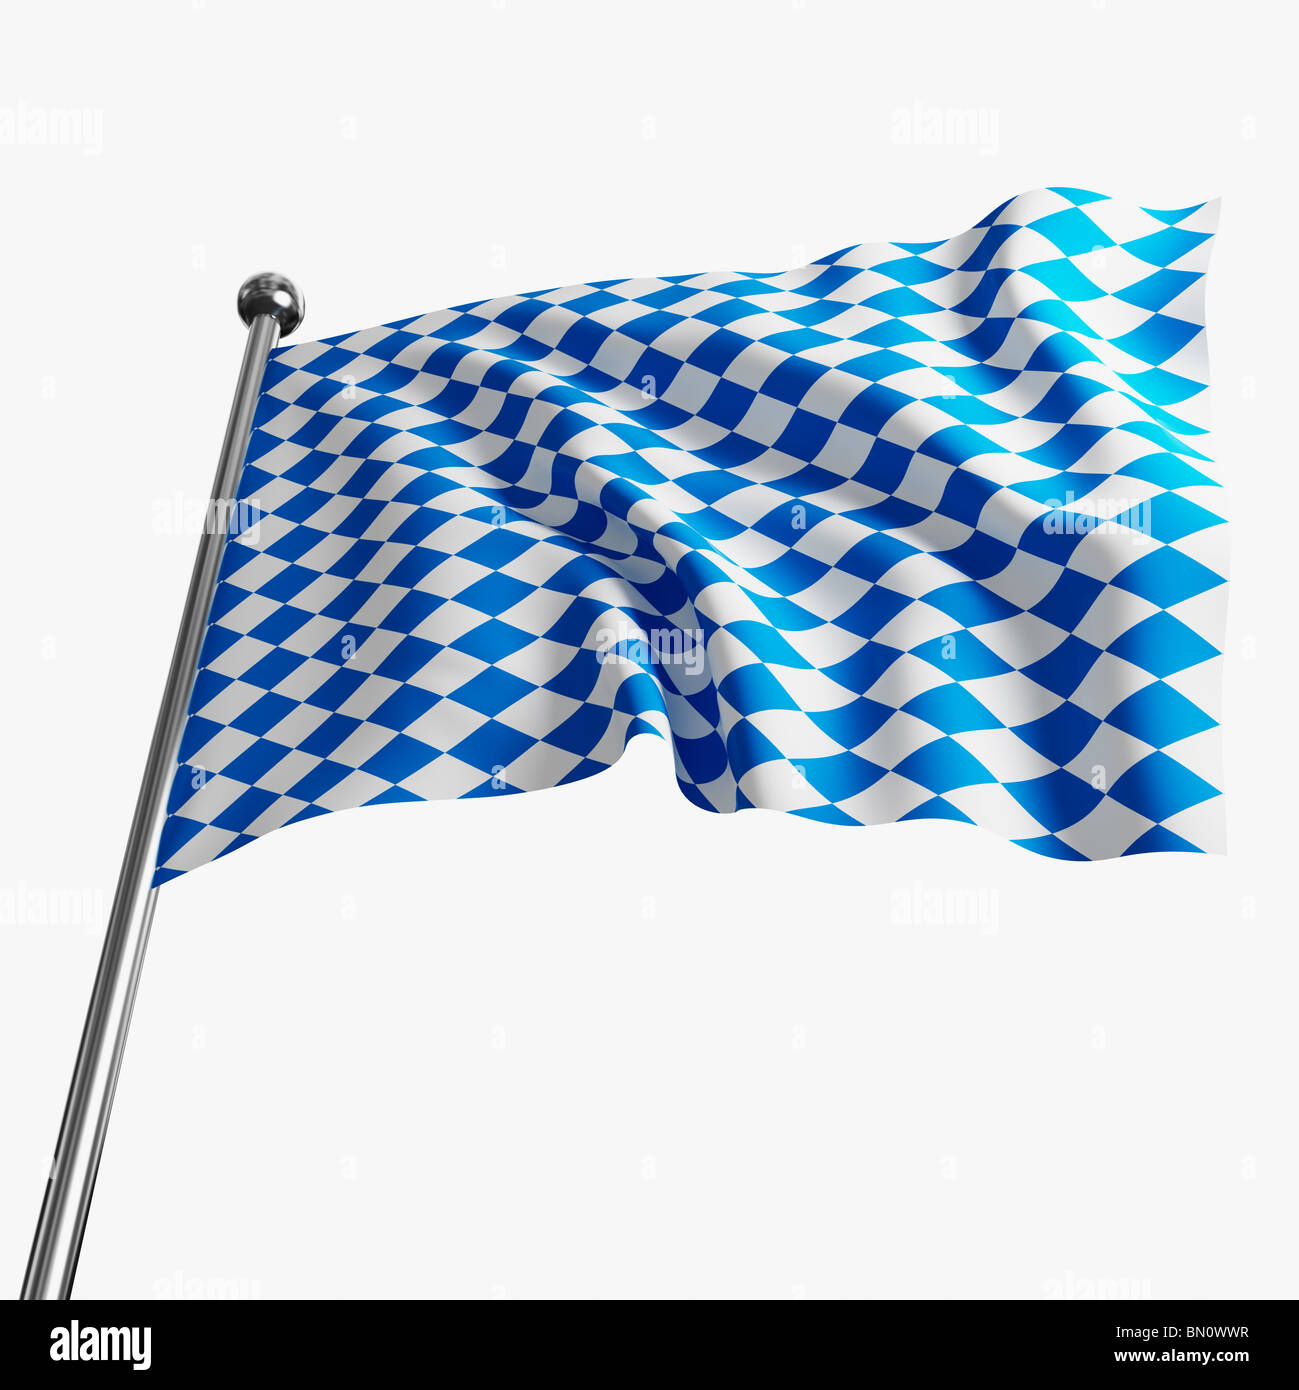 Flagge Fahne Bayern - Kostenloses Foto auf Pixabay - Pixabay